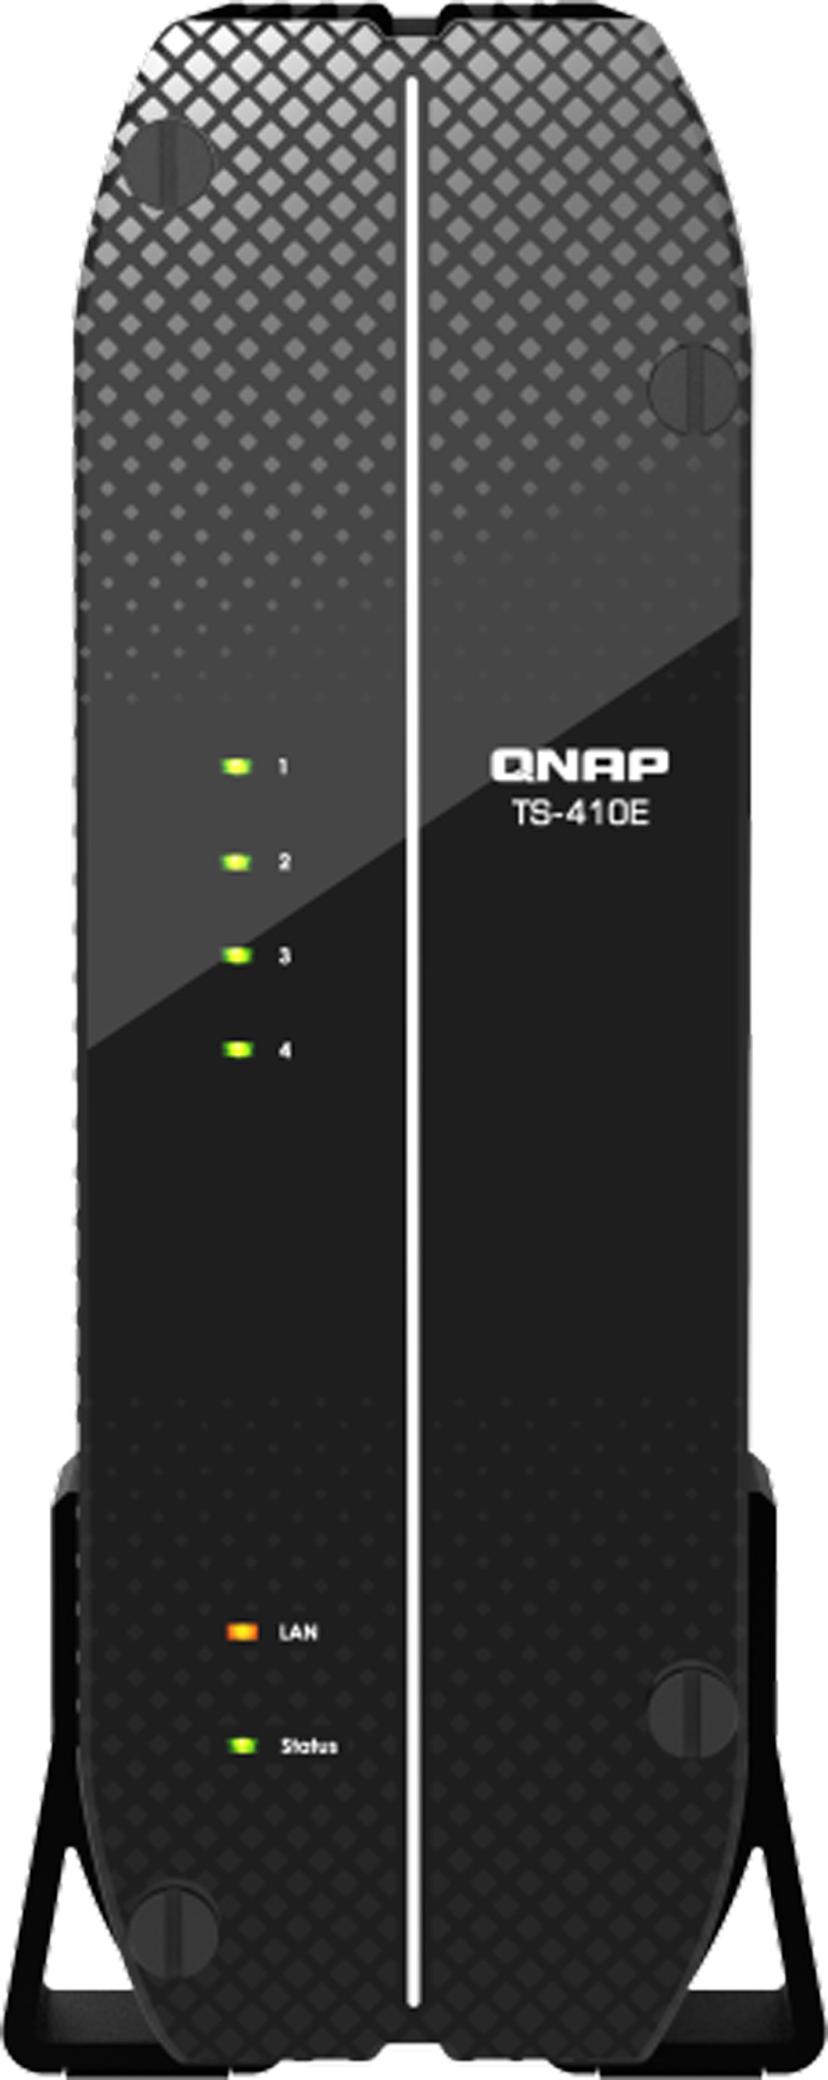 QNAP QNAP TS-410E NAS Tower Ethernet LAN Musta J6412